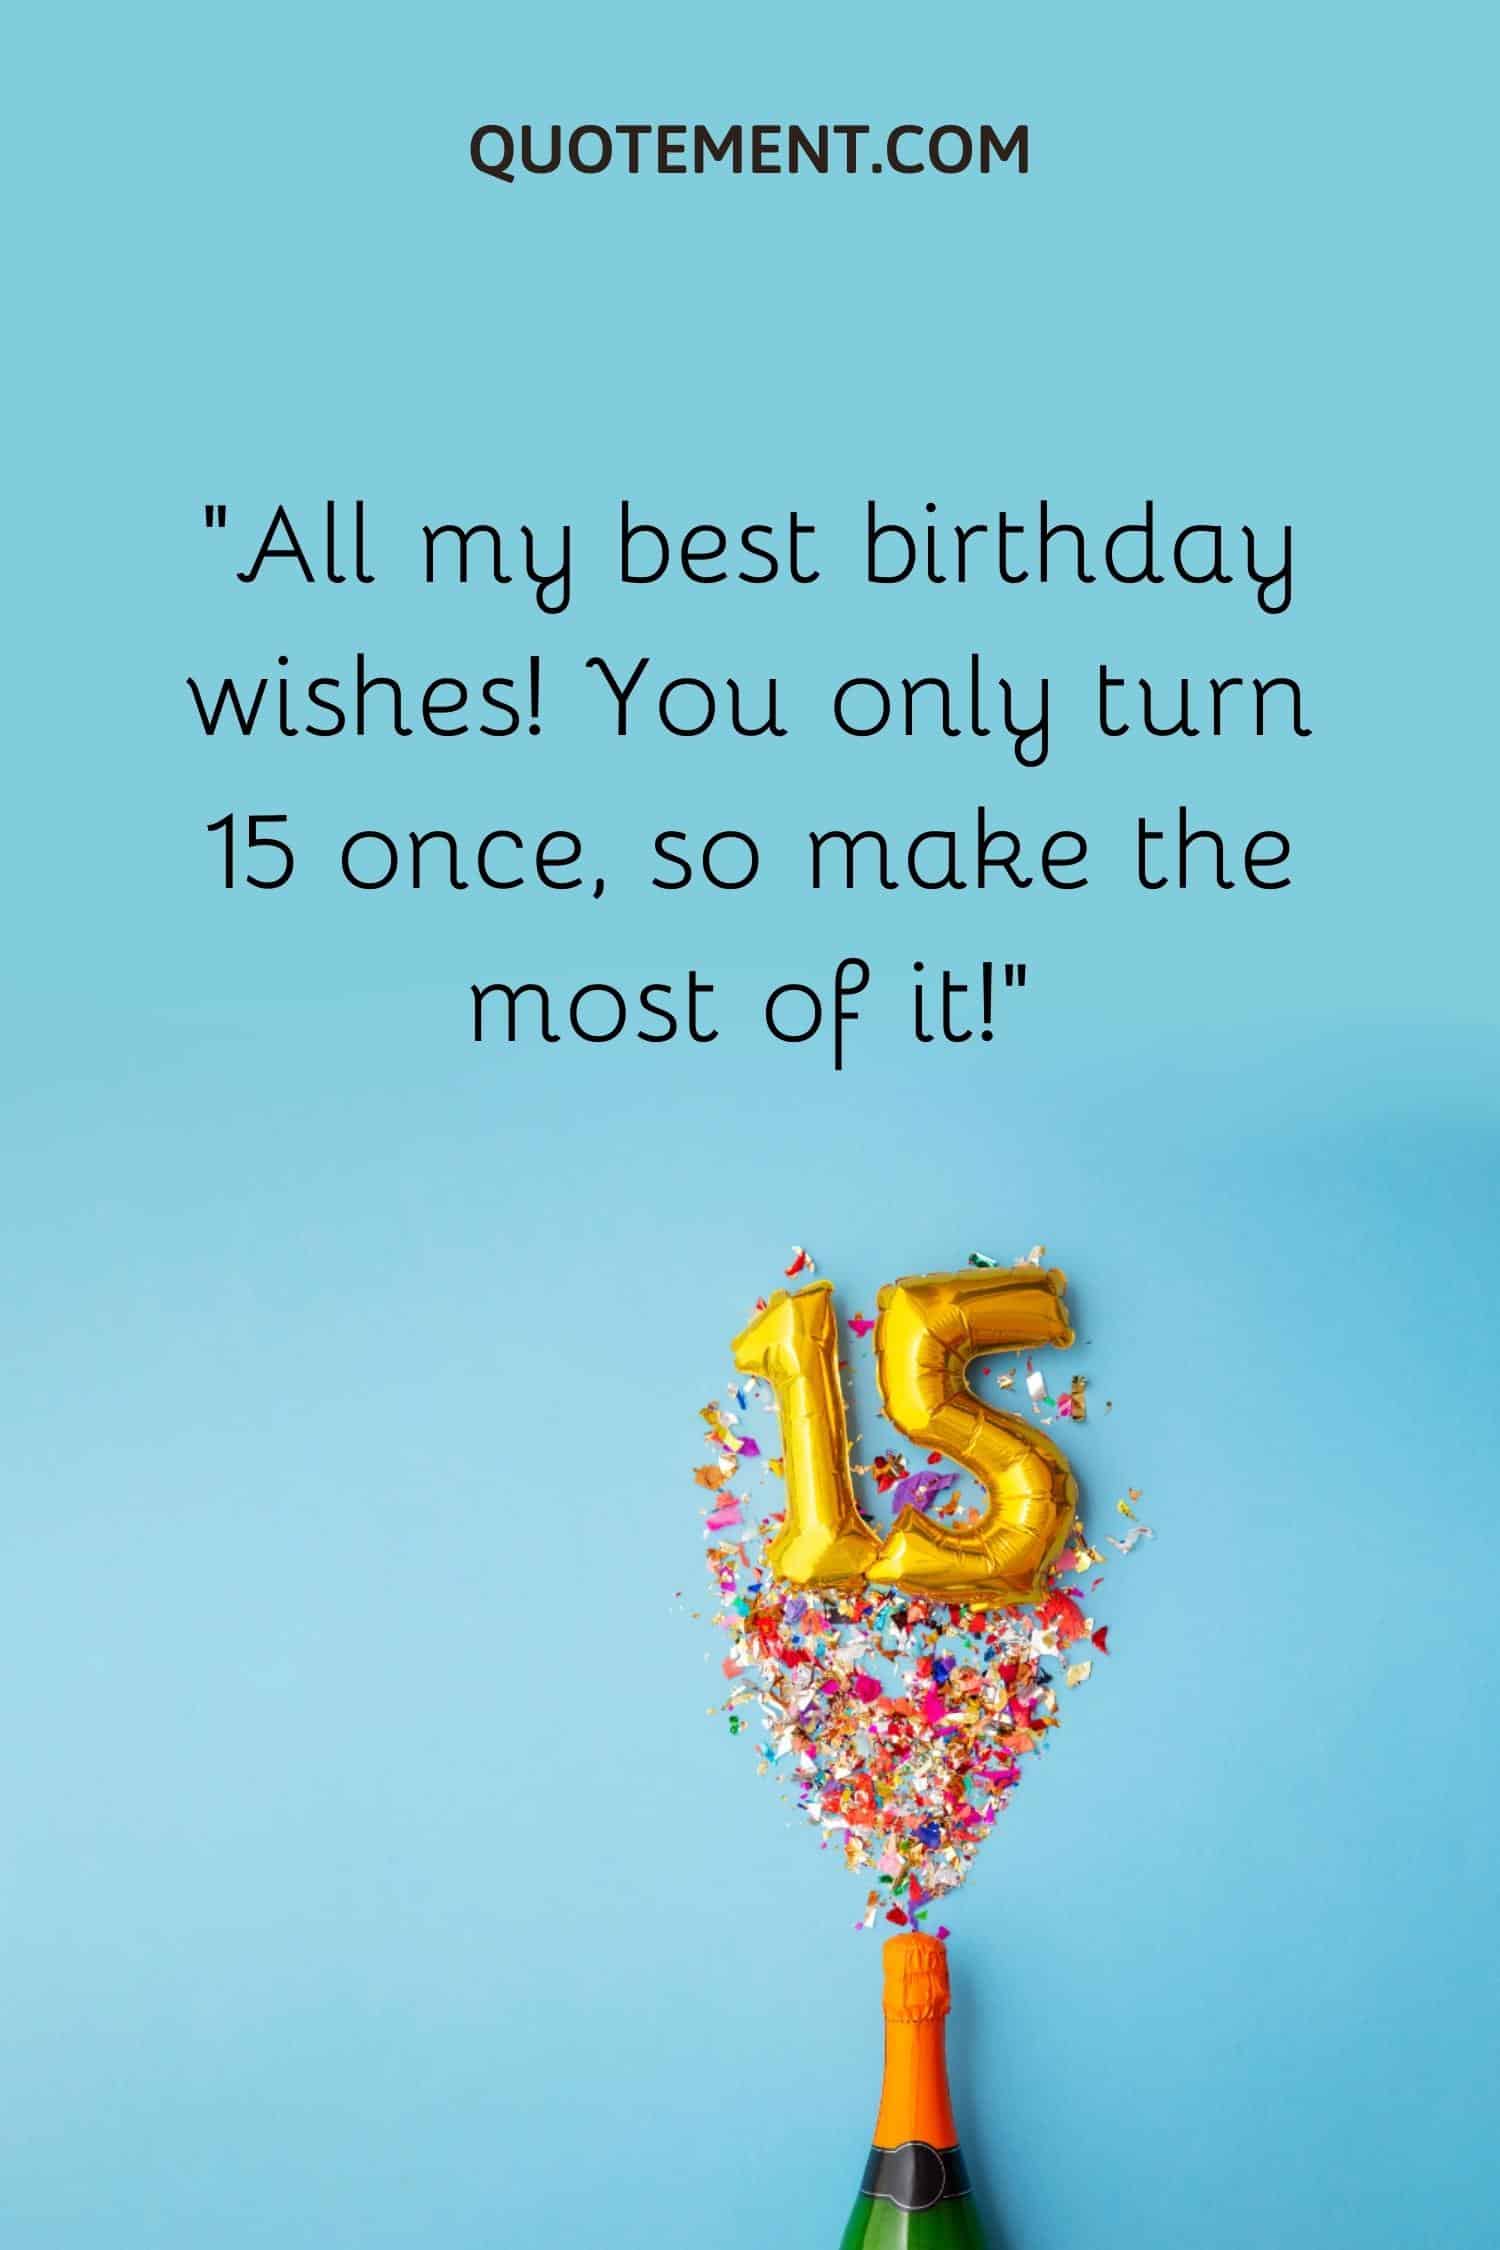 All my best birthday wishes